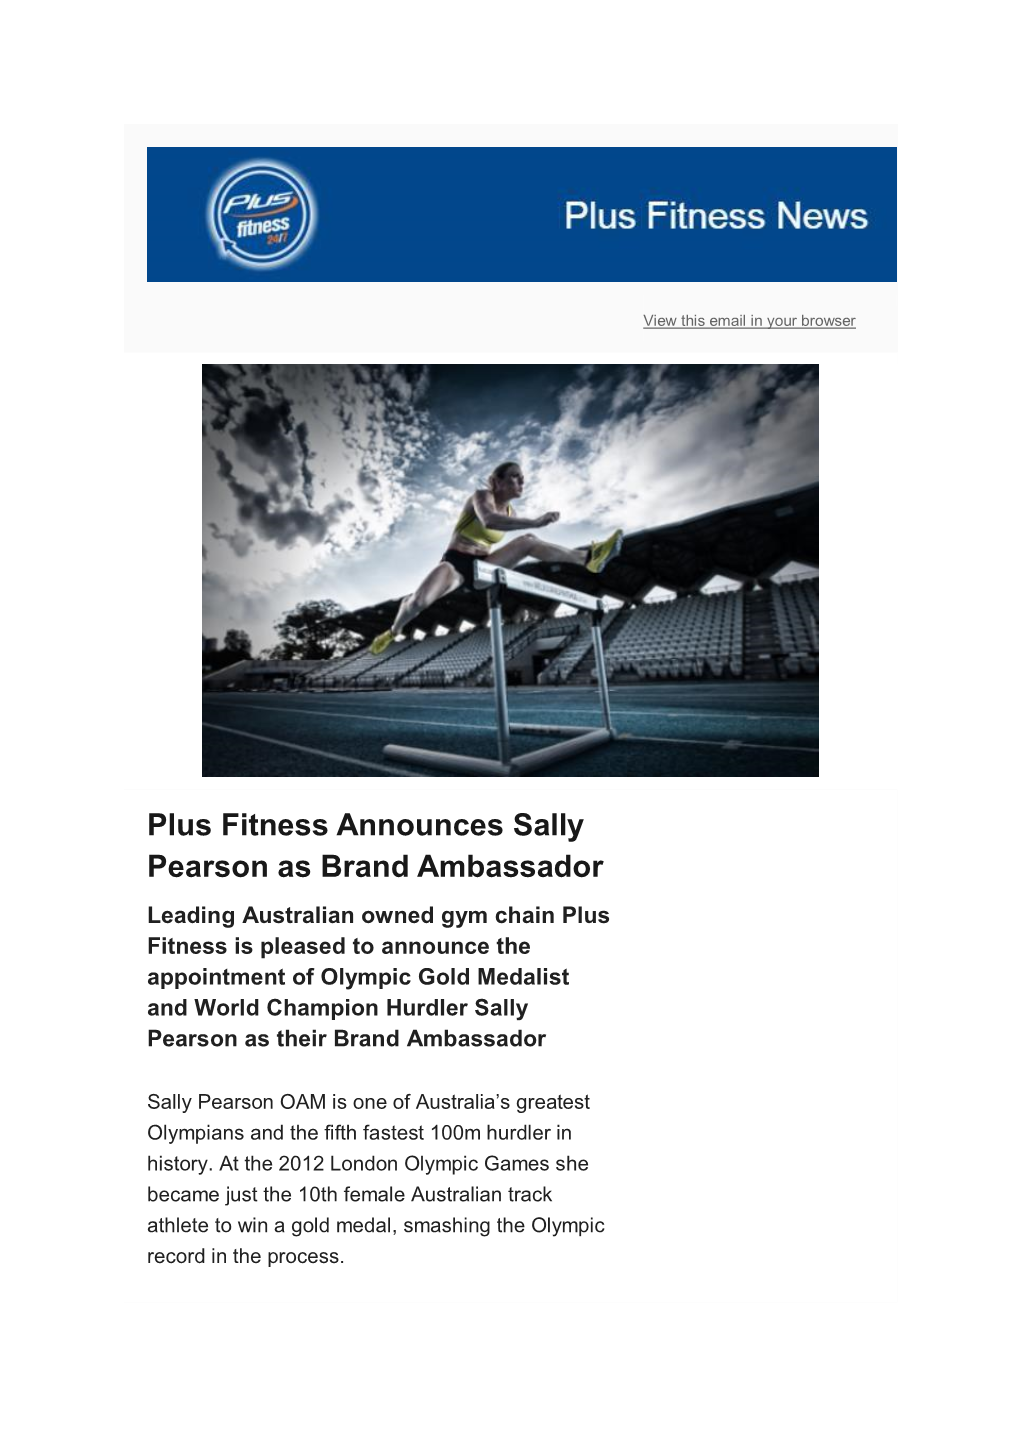 Plus Fitness Announces Sally Pearson As Brand Ambassador